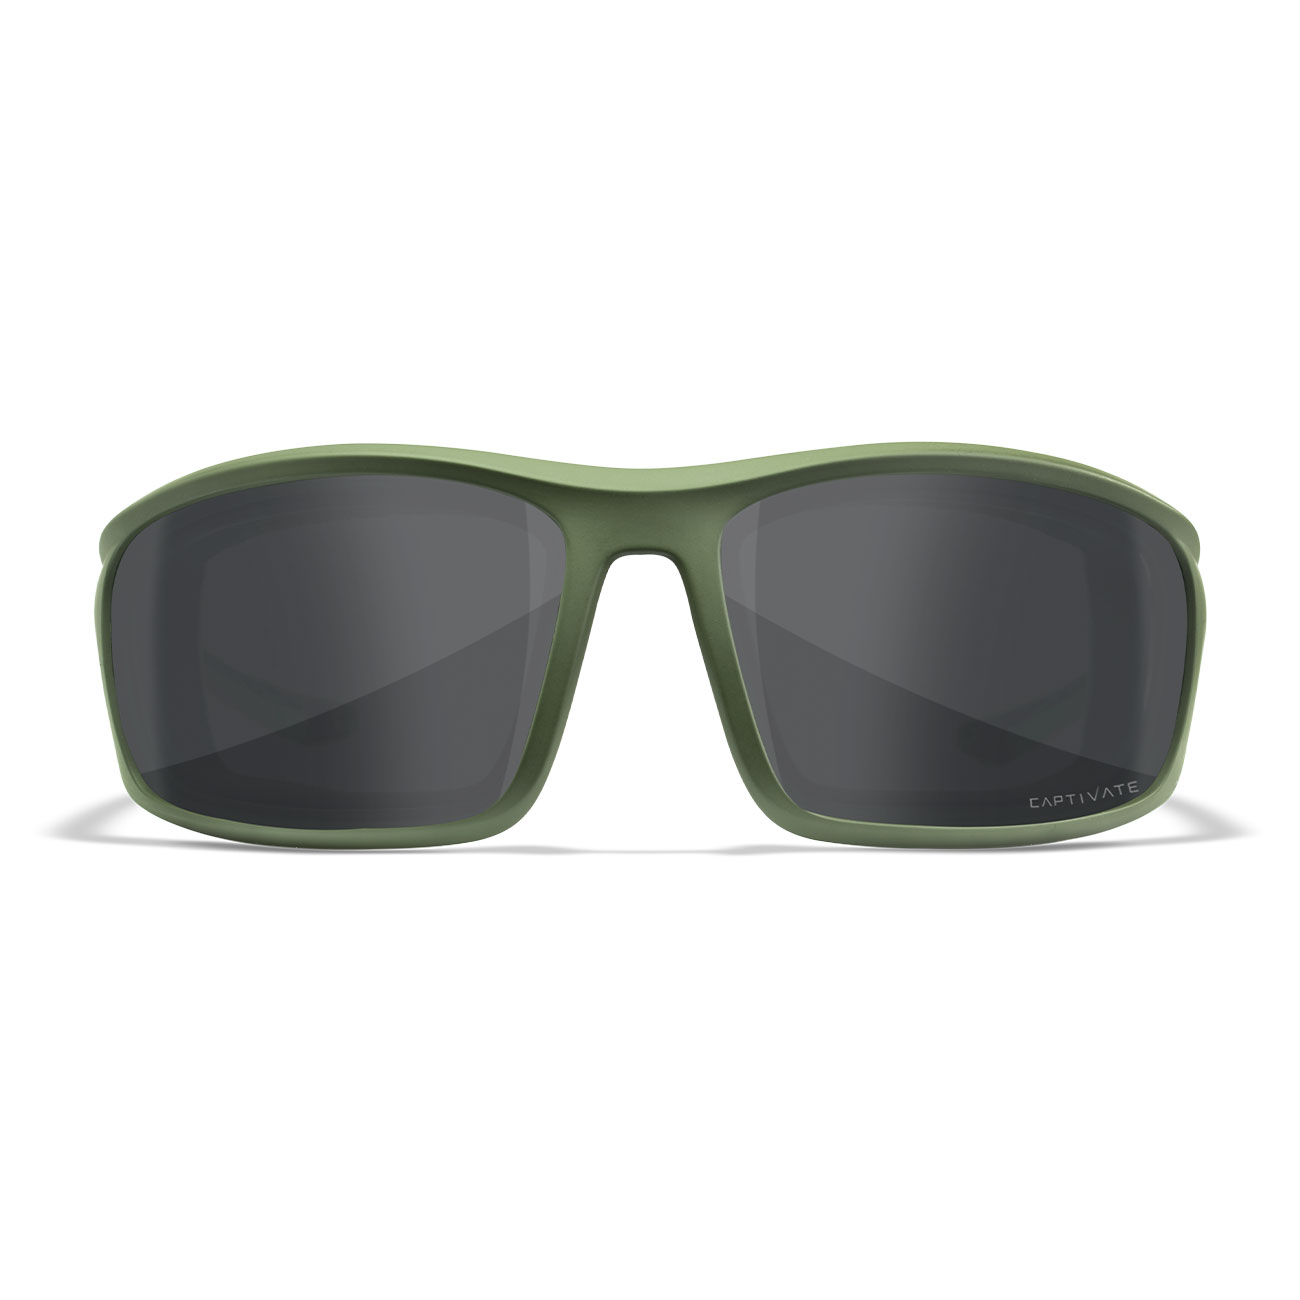 Wiley X Sonnenbrille Grid Captivate matt oliv Glser grau inkl. Brillenetui und Facial Cavity Dichtung Bild 1